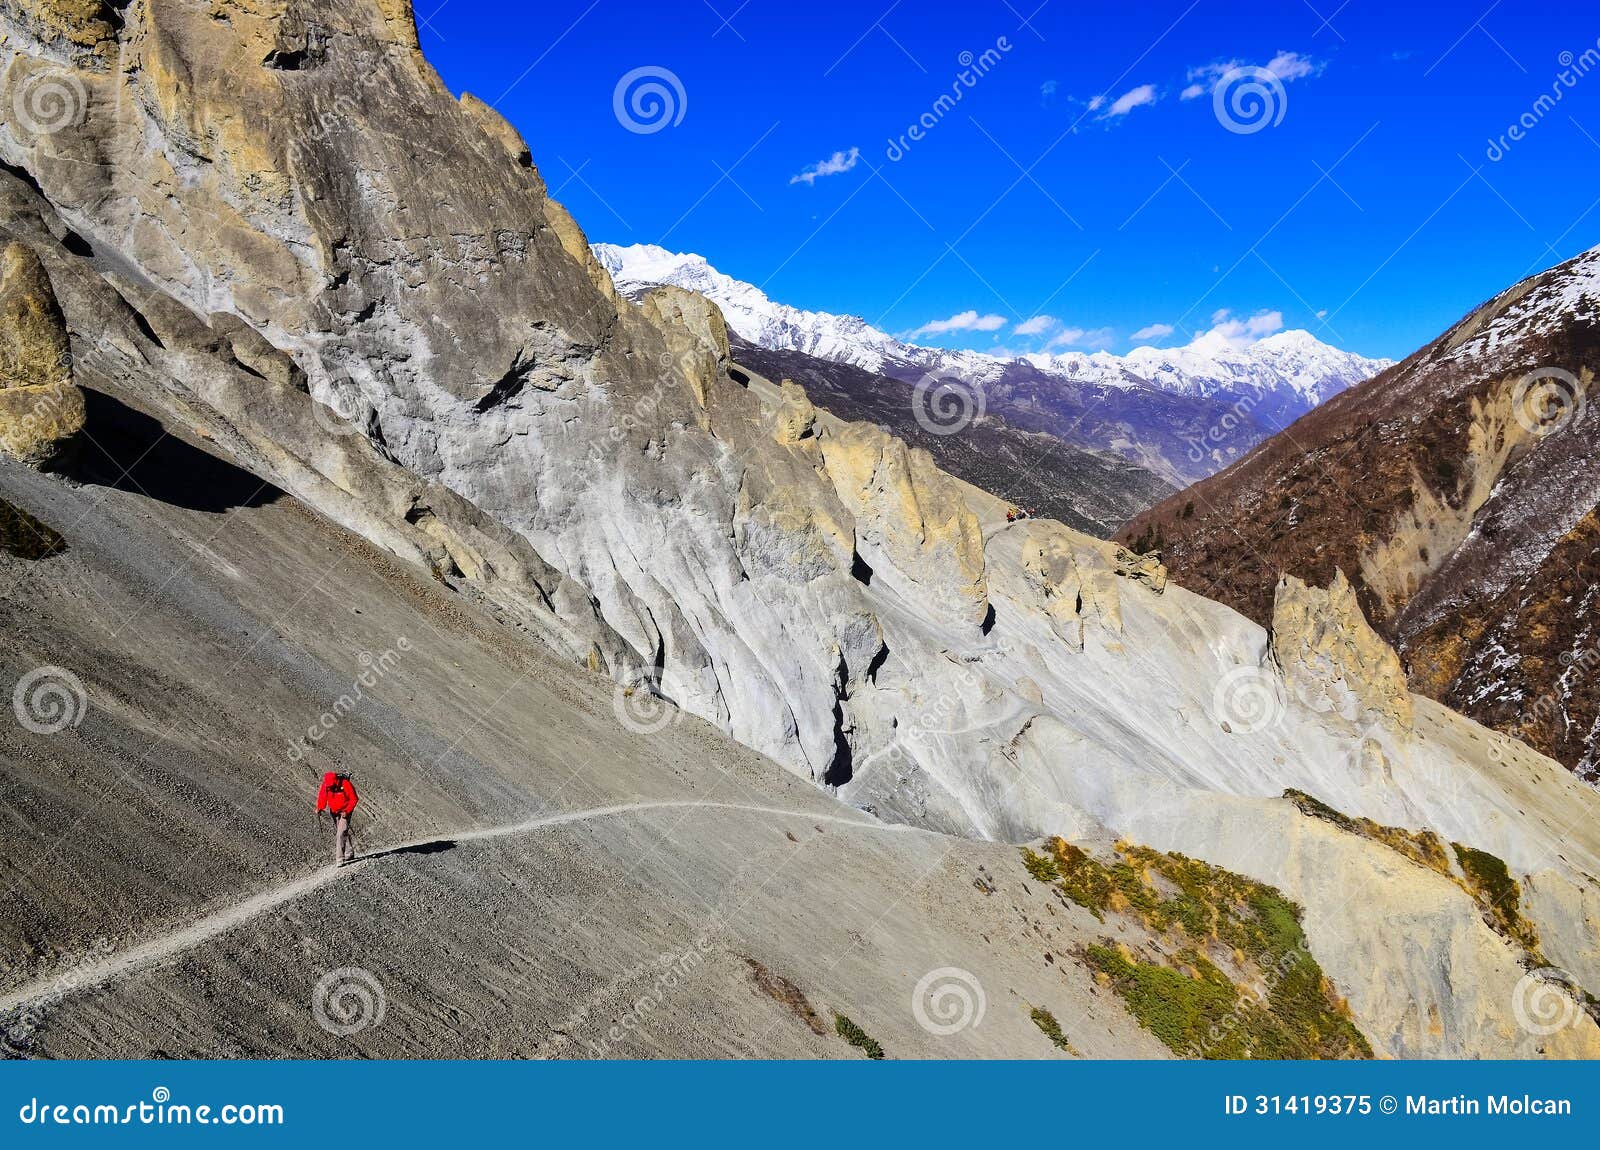 trekker in red jacket in himalayas mountains